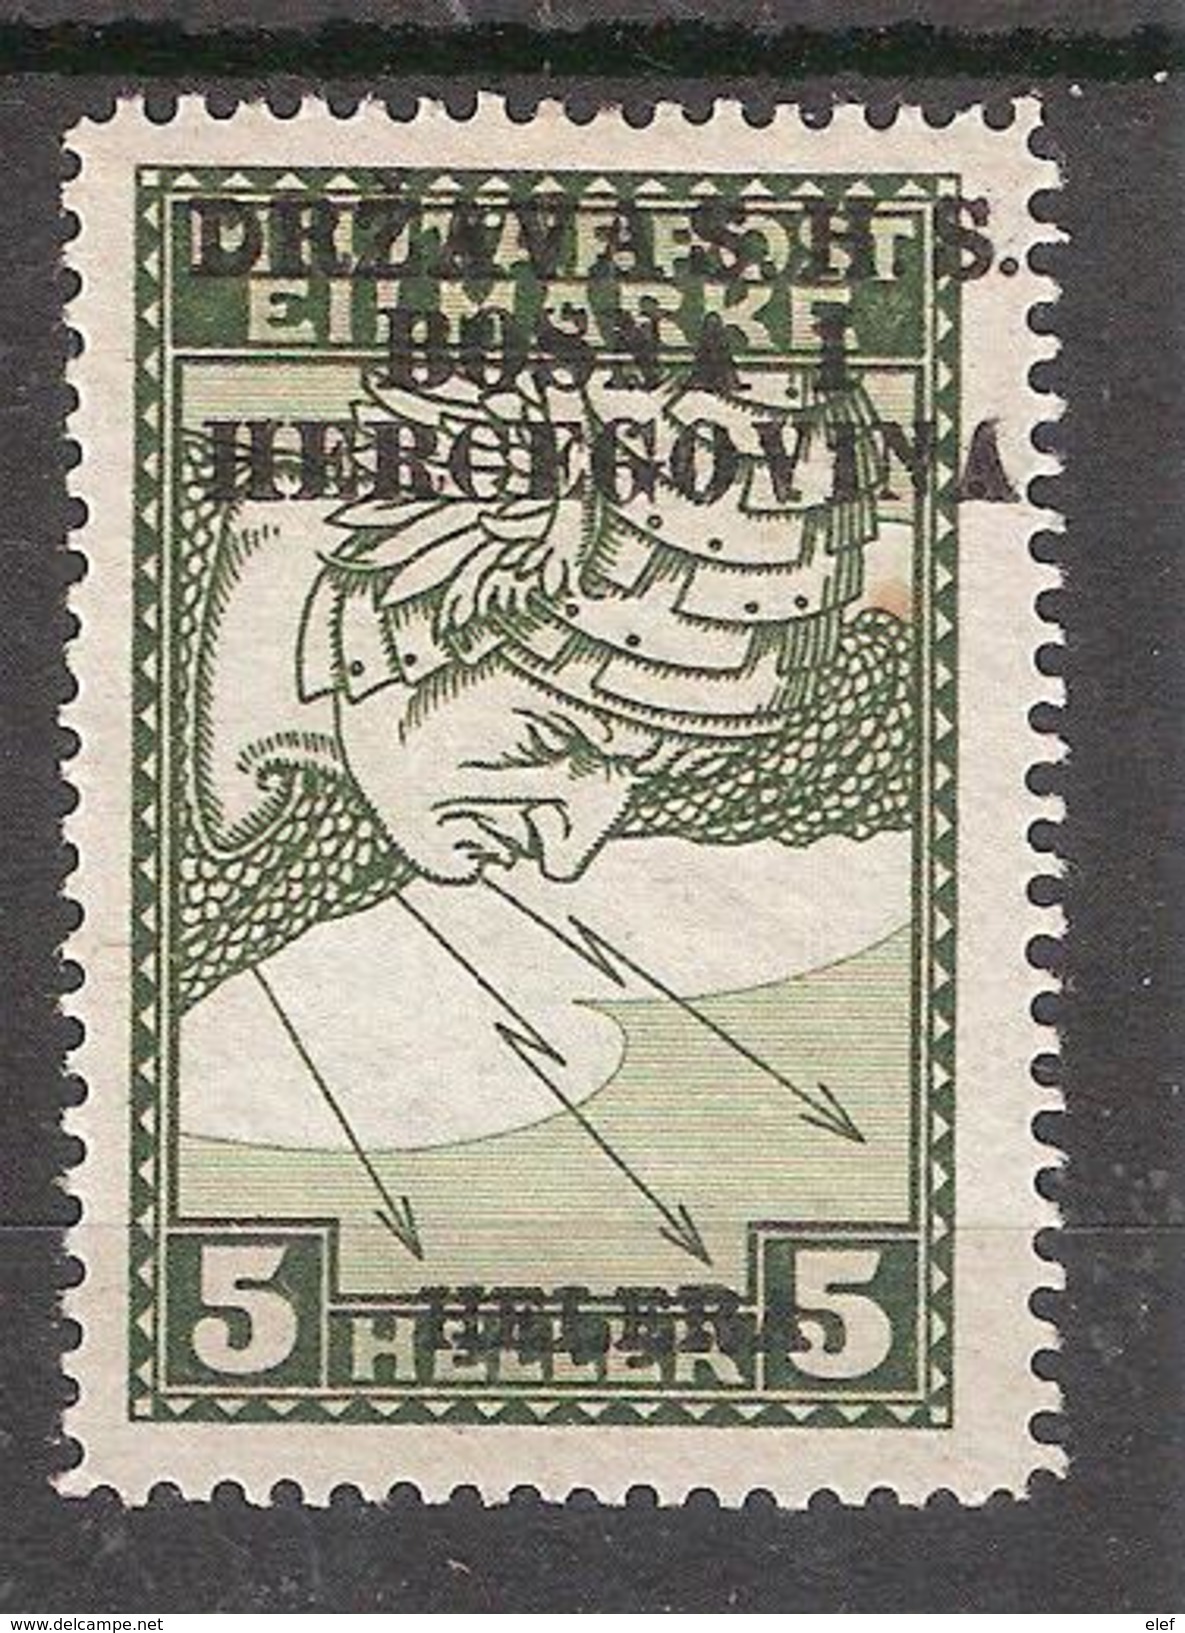 Jugoslavia / Yougoslavie 1919, JOURNAUX N° 4 , 5 Heller Vert Olive Surchargé Bosna Hercegovina, Neuf * / MH, TB - Zeitungsmarken